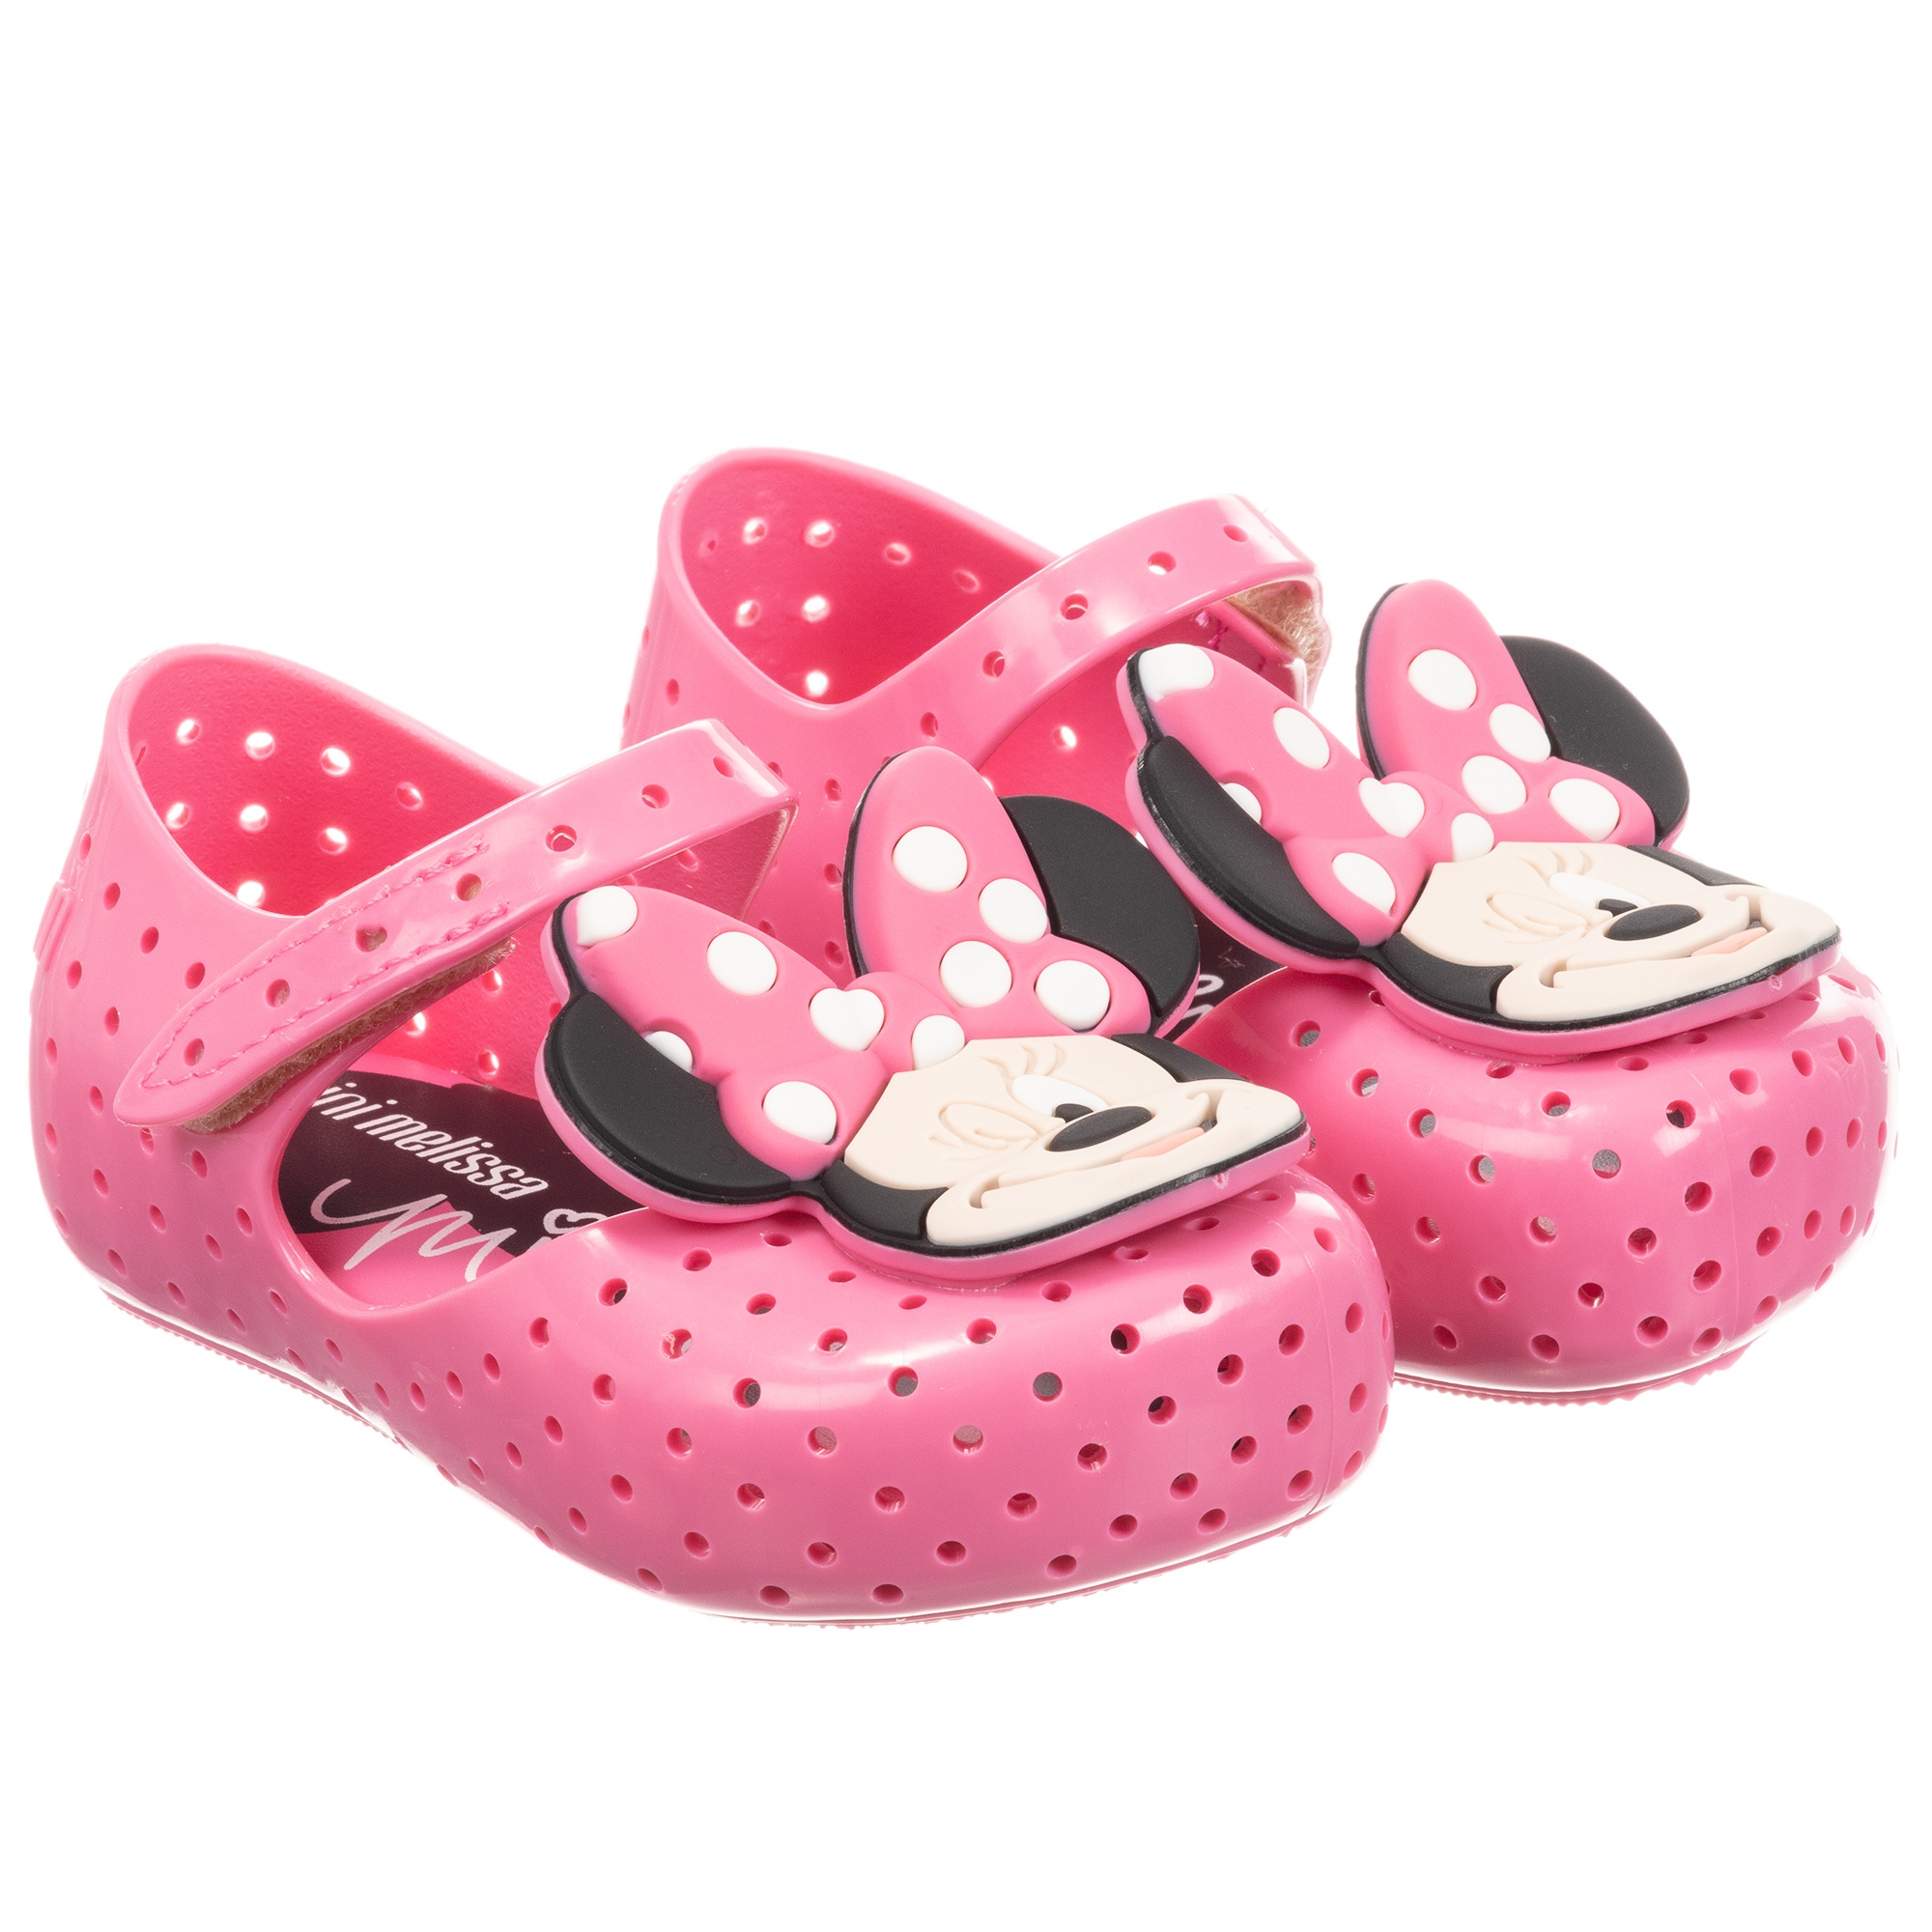 Disney Minnie Mouse Shoes Toddler Little Girls size 8 Unicorn Pink Metallic  | eBay